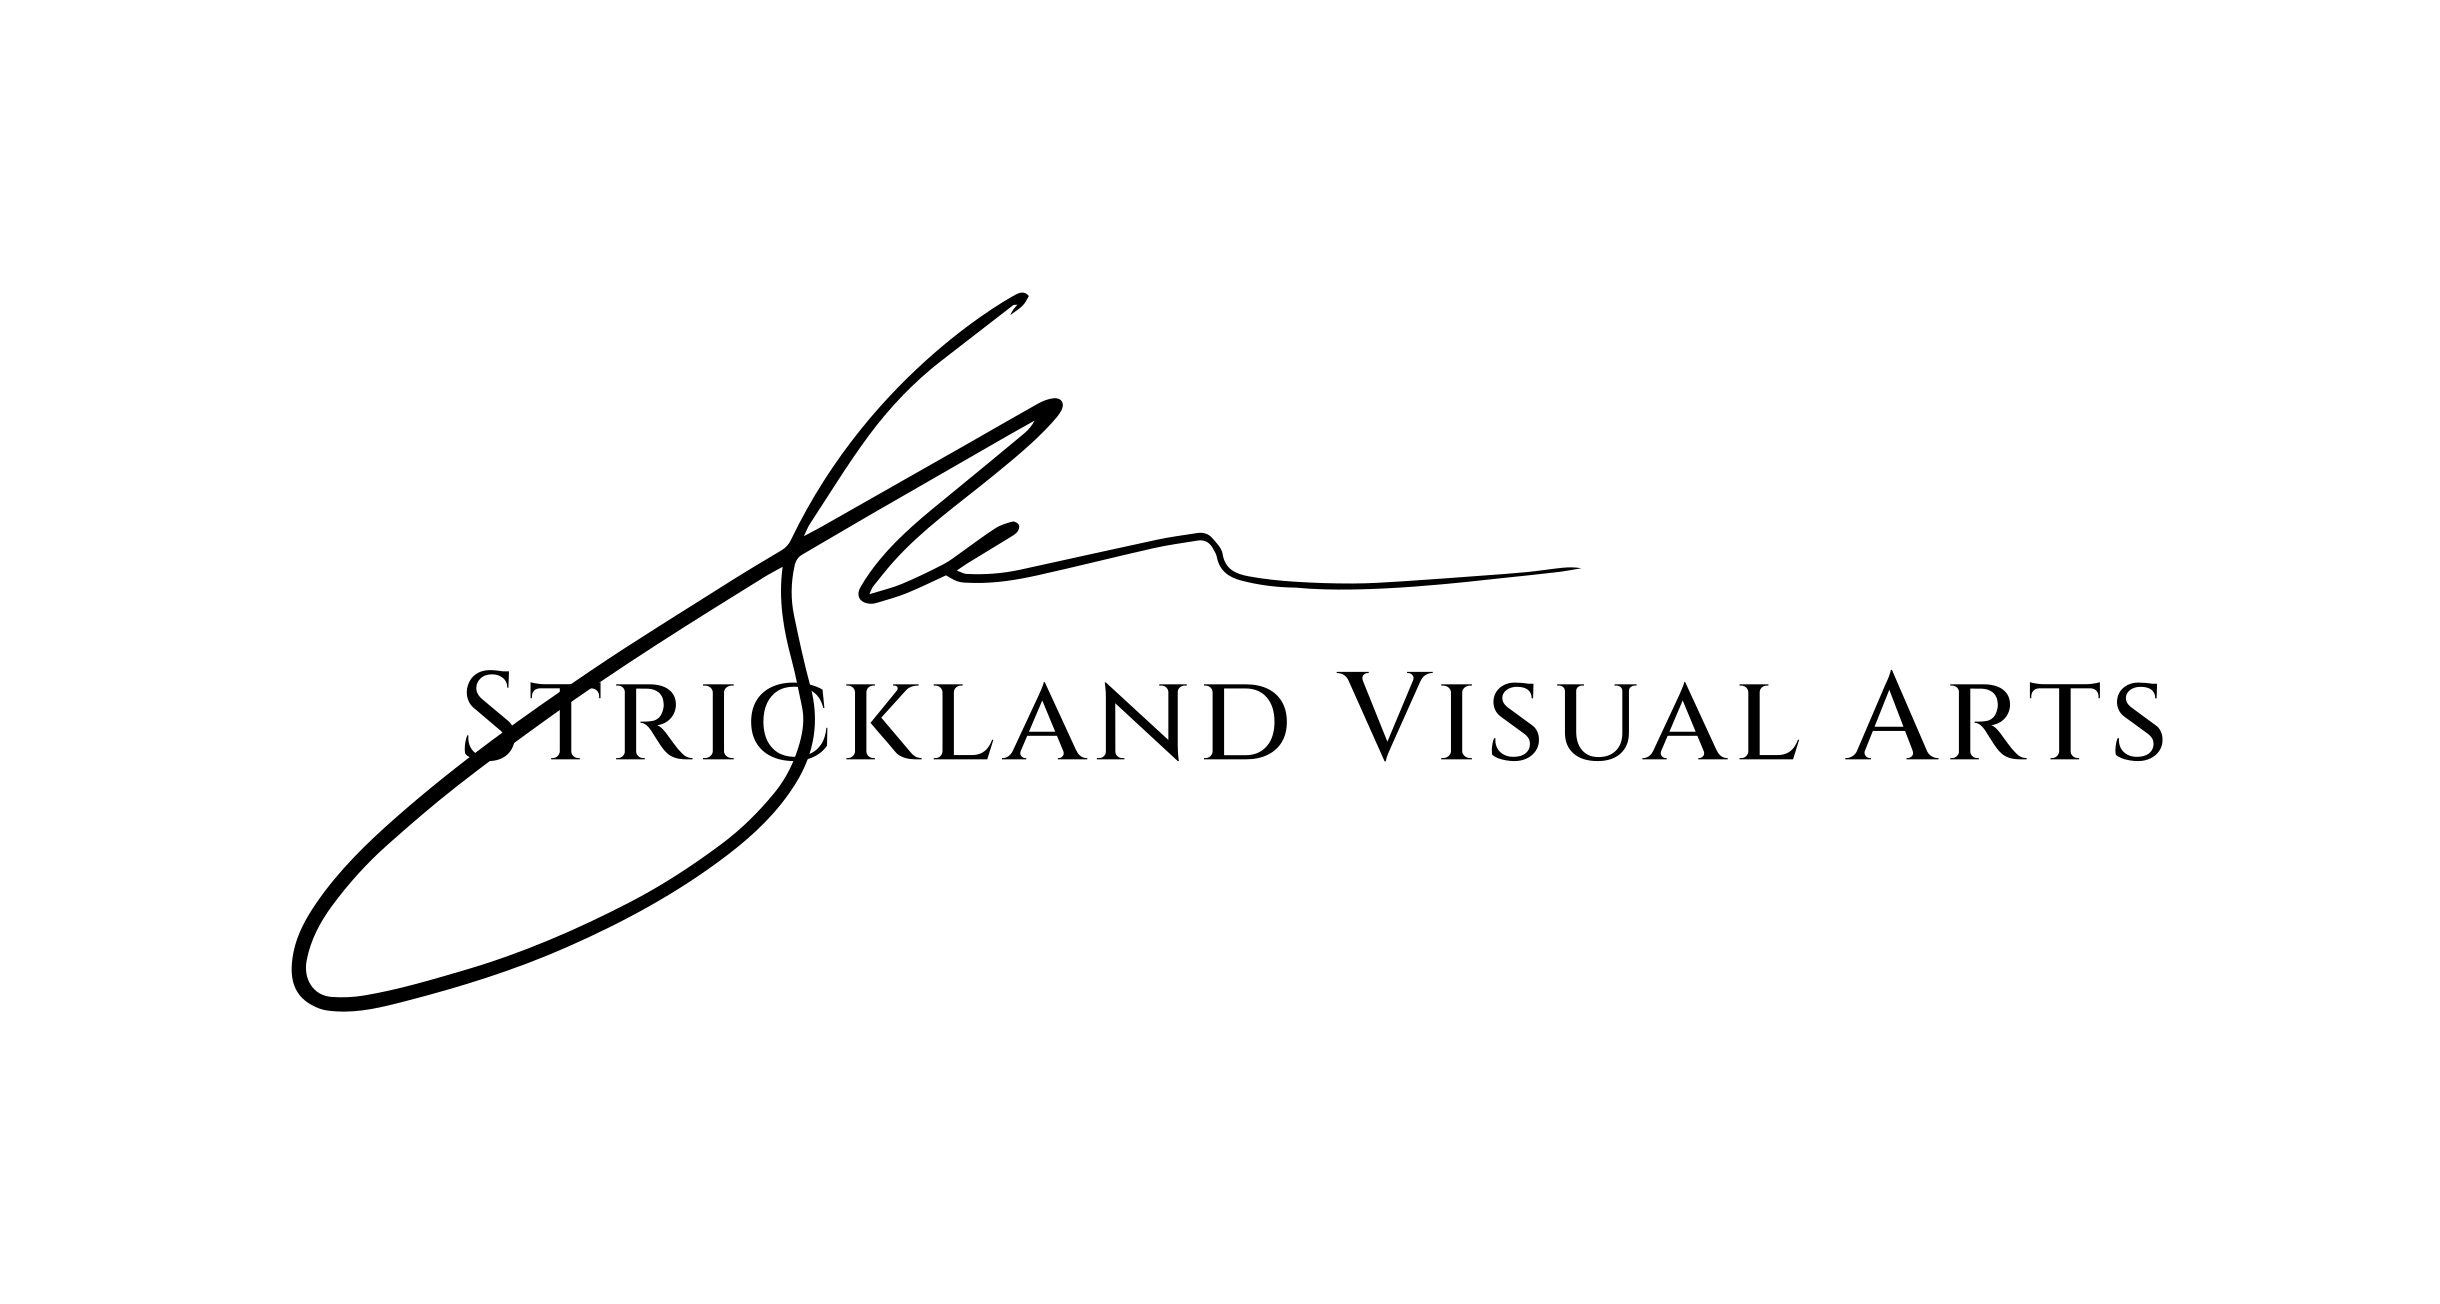 Strickland Visual Arts